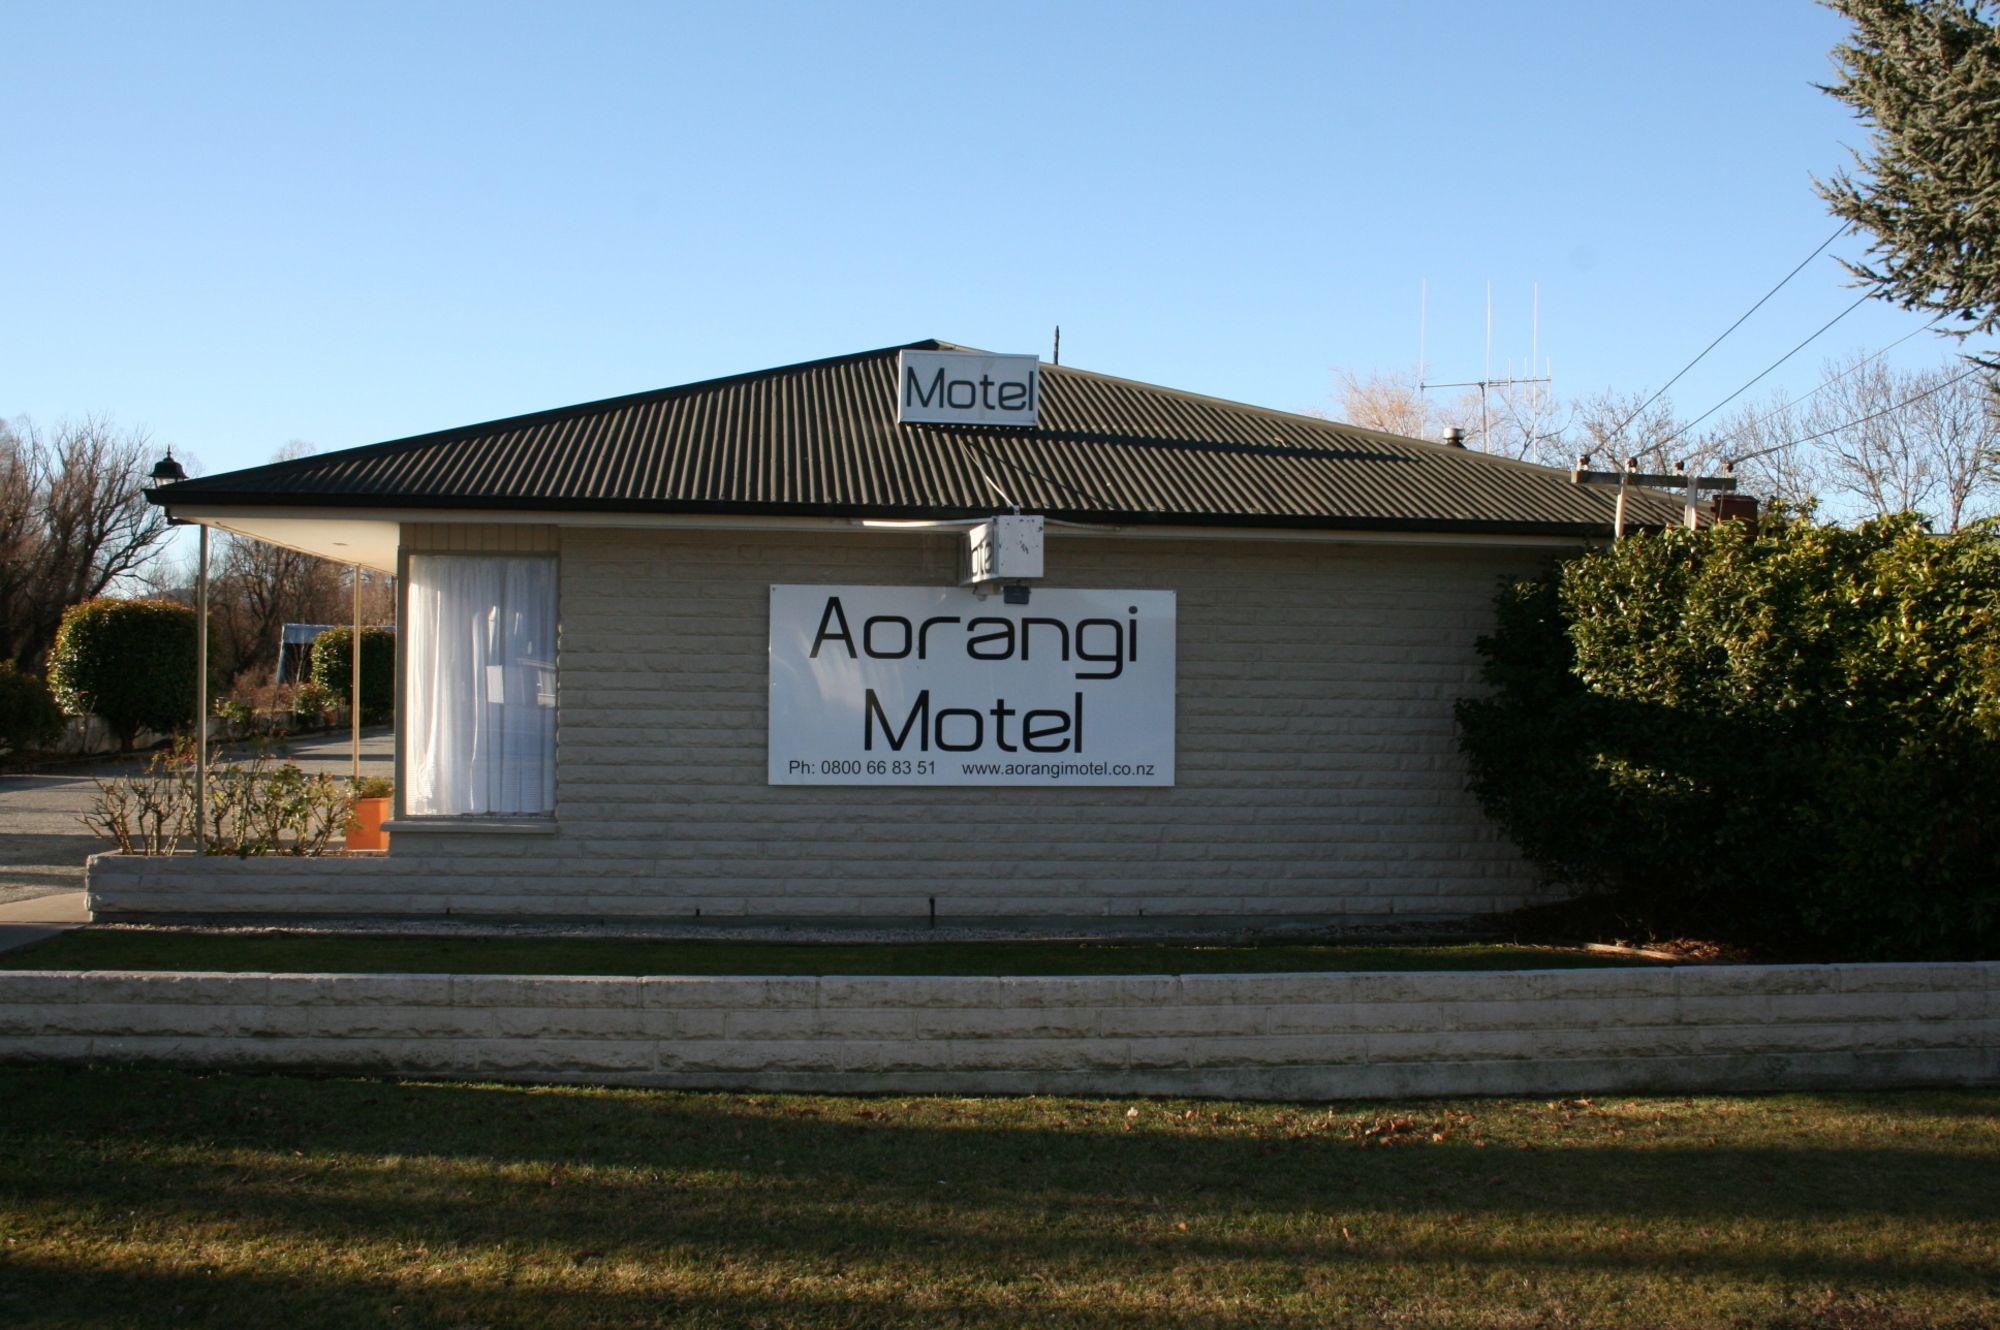 Variados (as) Aorangi Motel